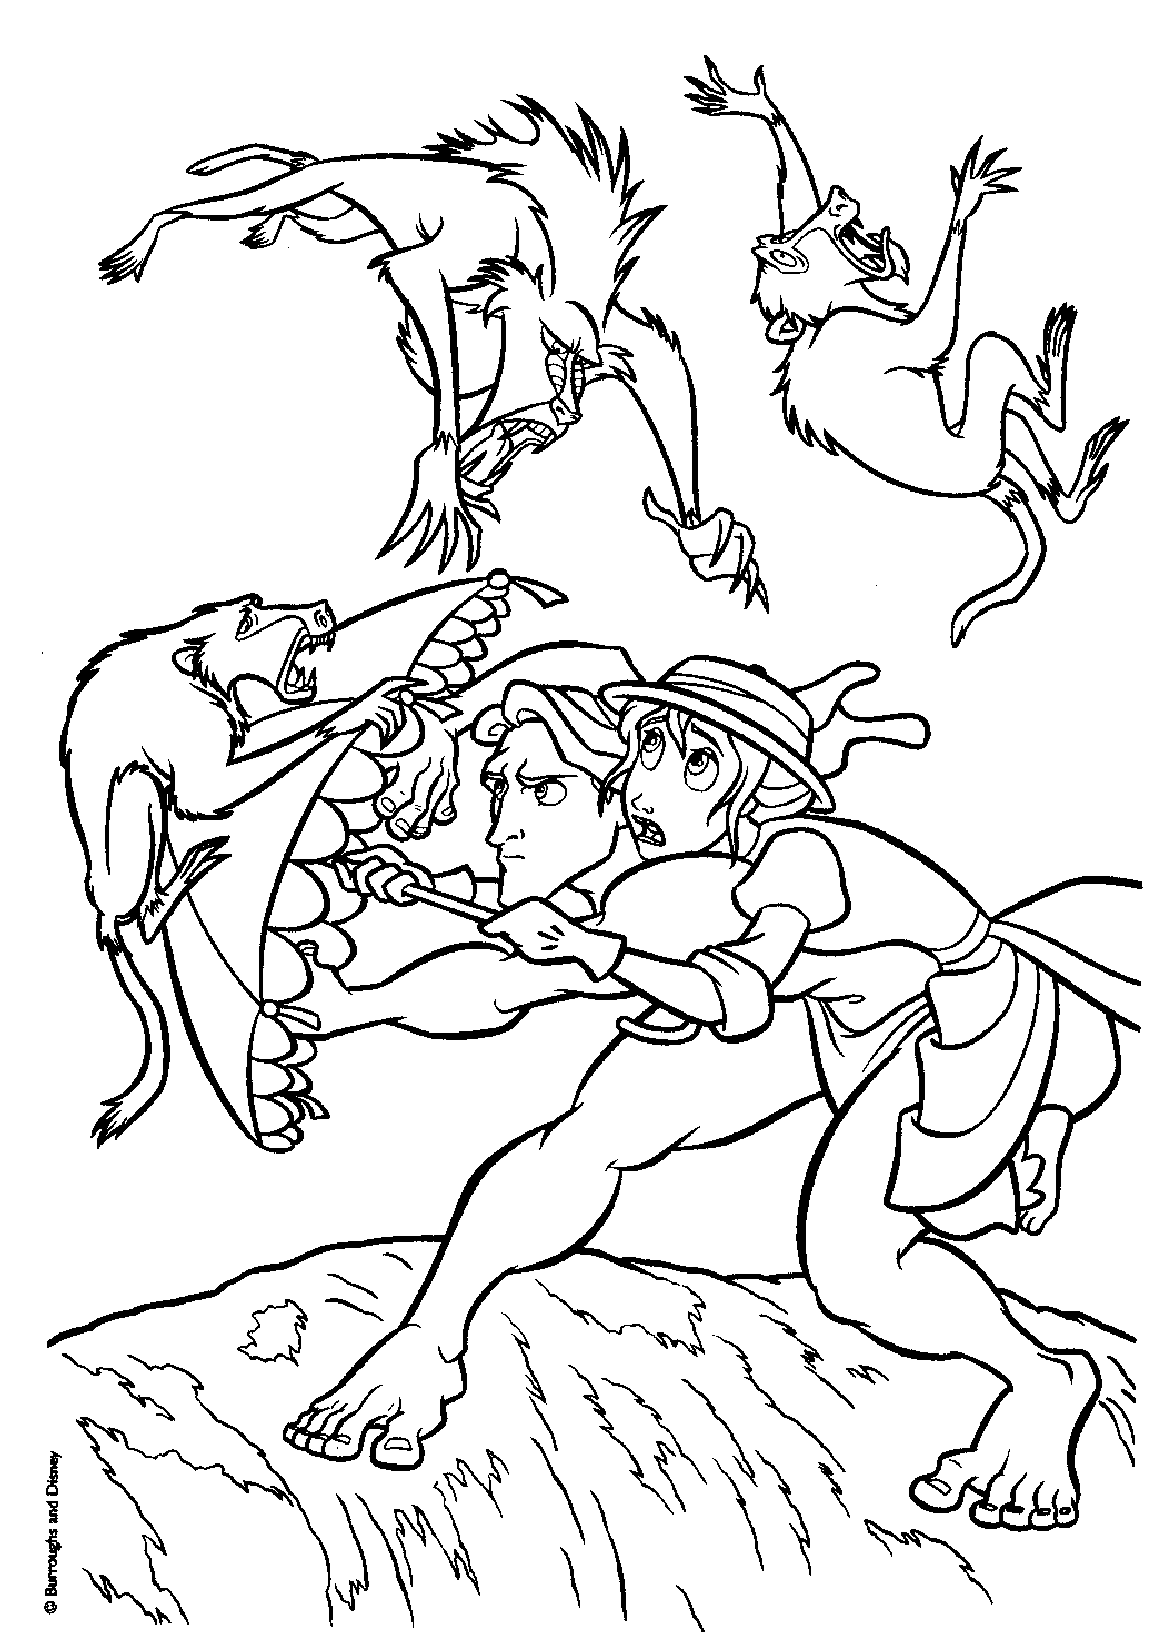 Tarzan Saves Jane coloring page